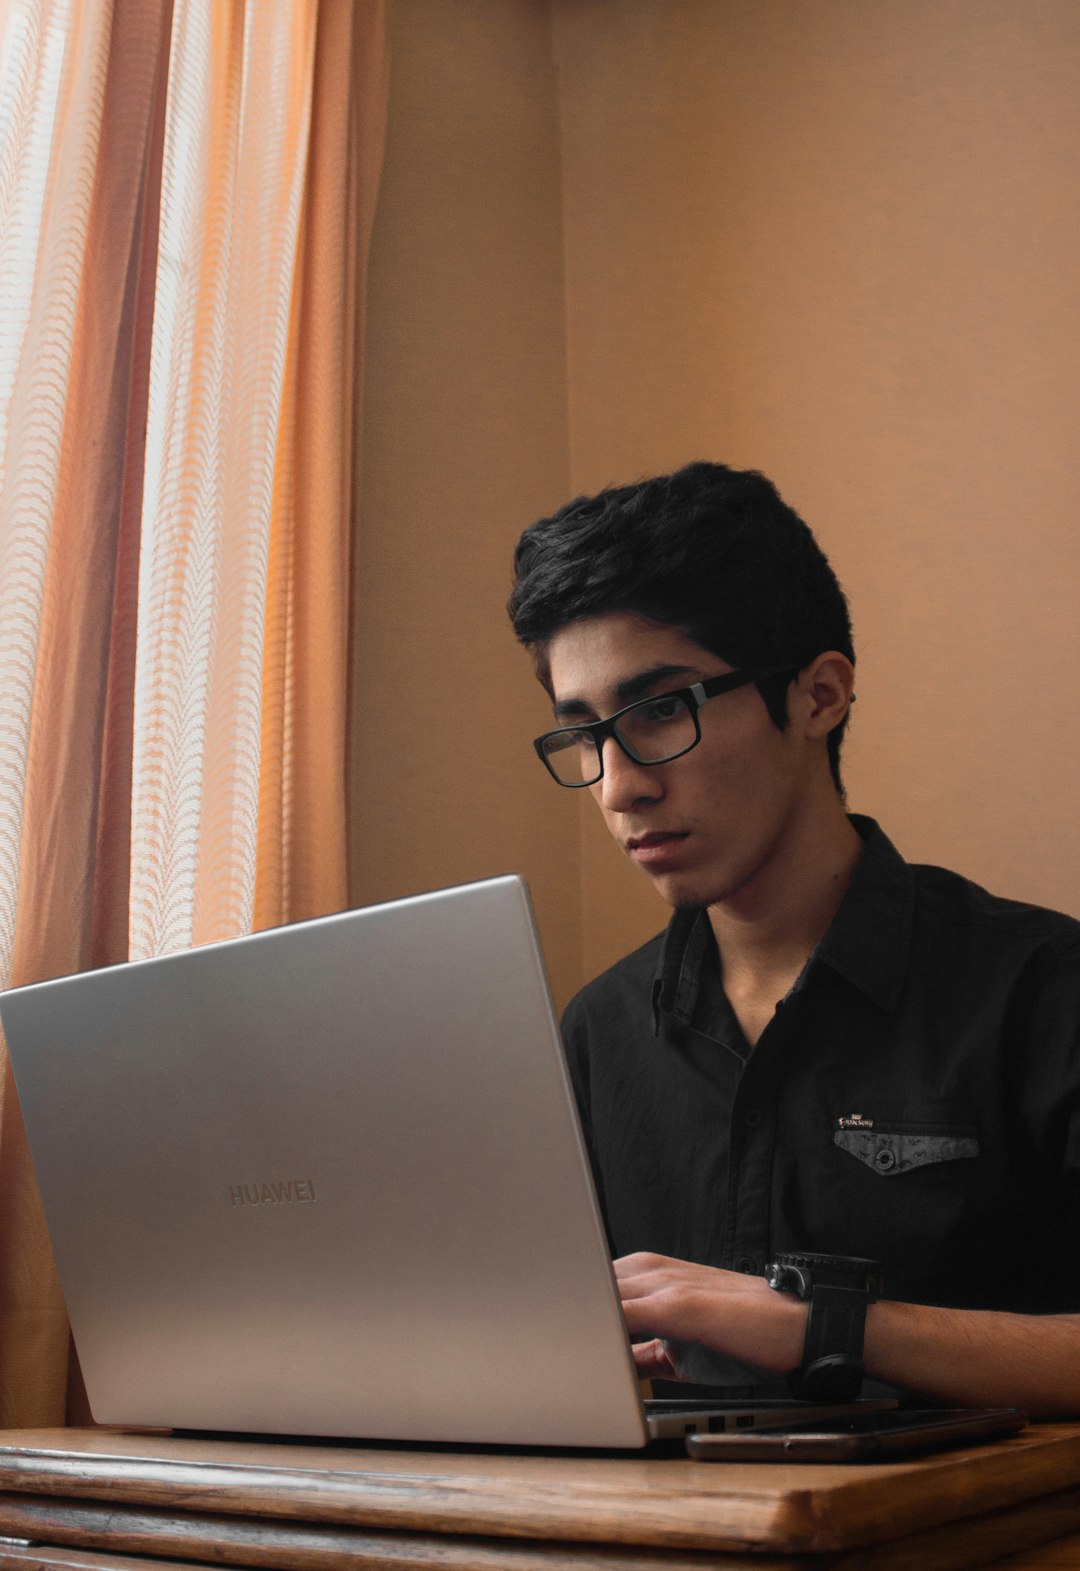 man in black polo shirt using gray asus laptop